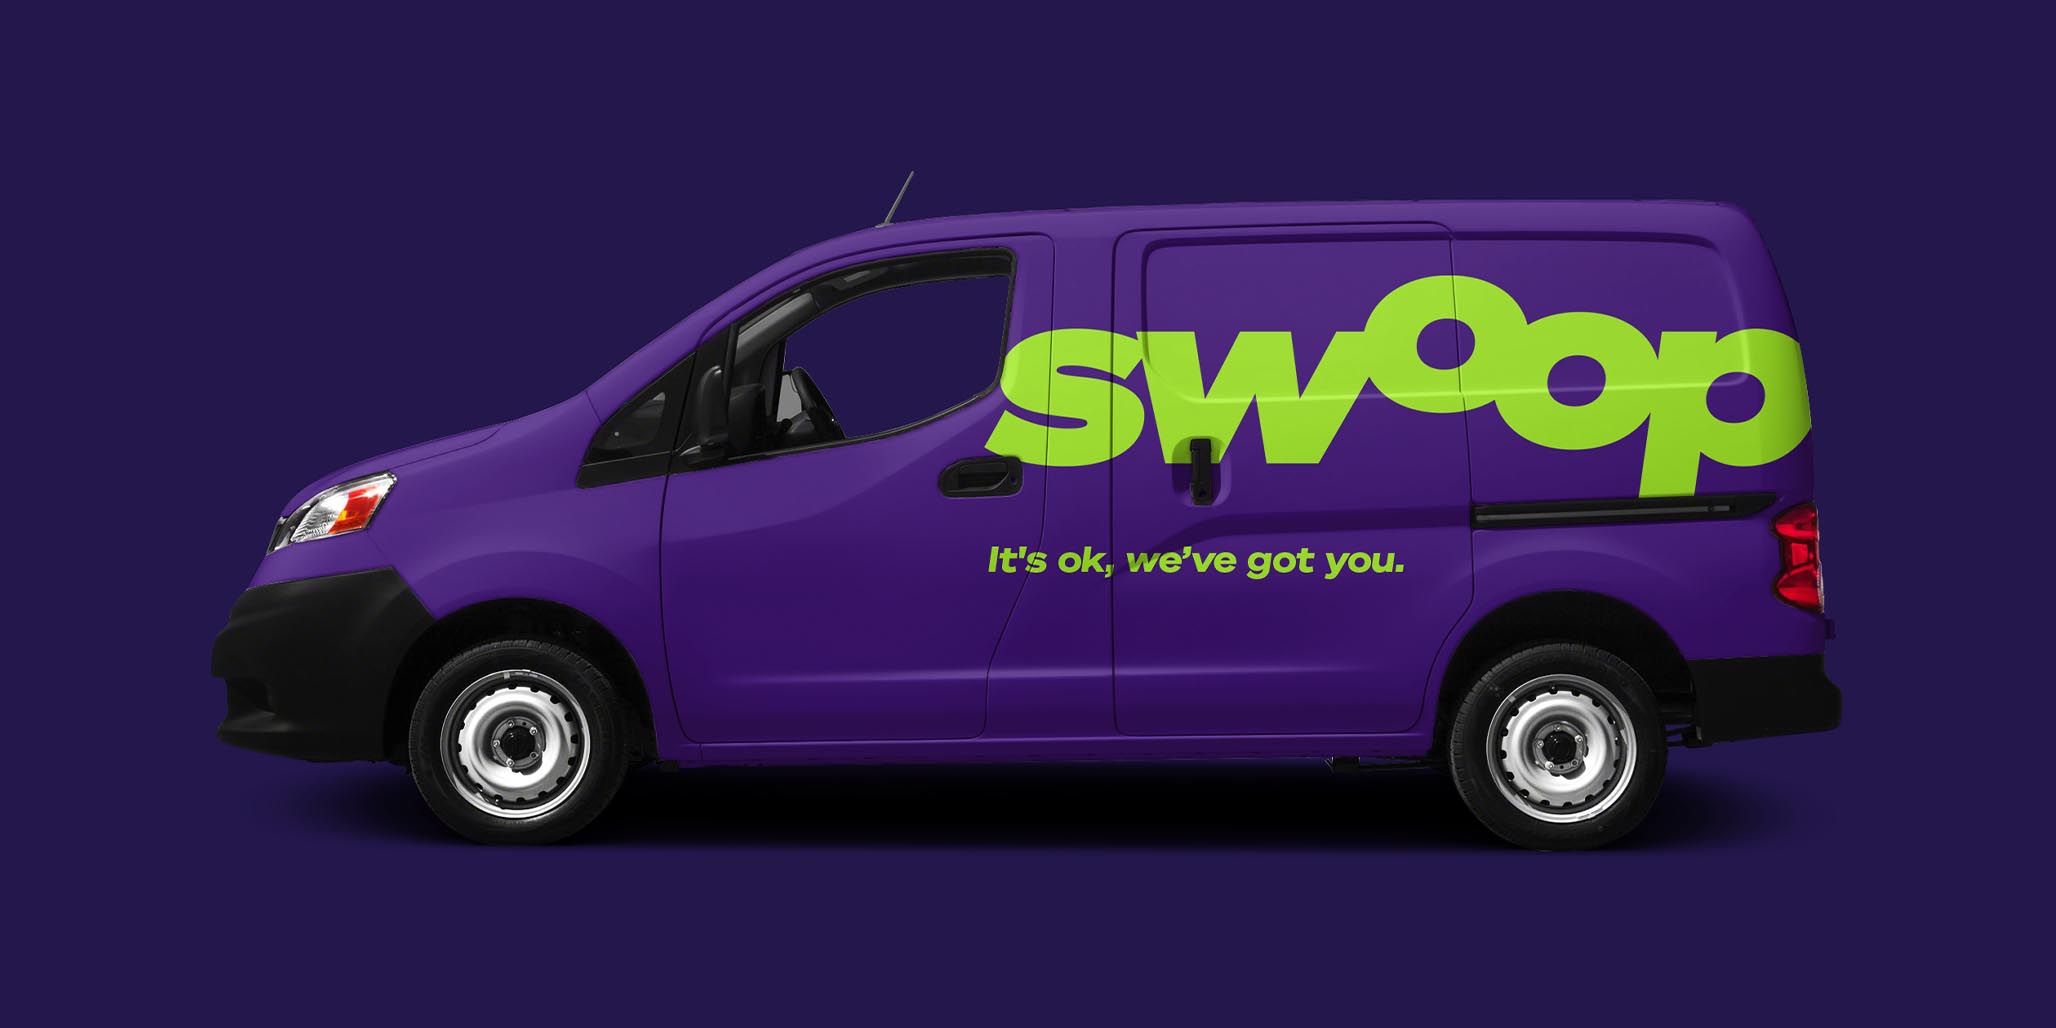 Brand Agency, Percept, create Brand Identity for Swoop, an Australian telco company, image M